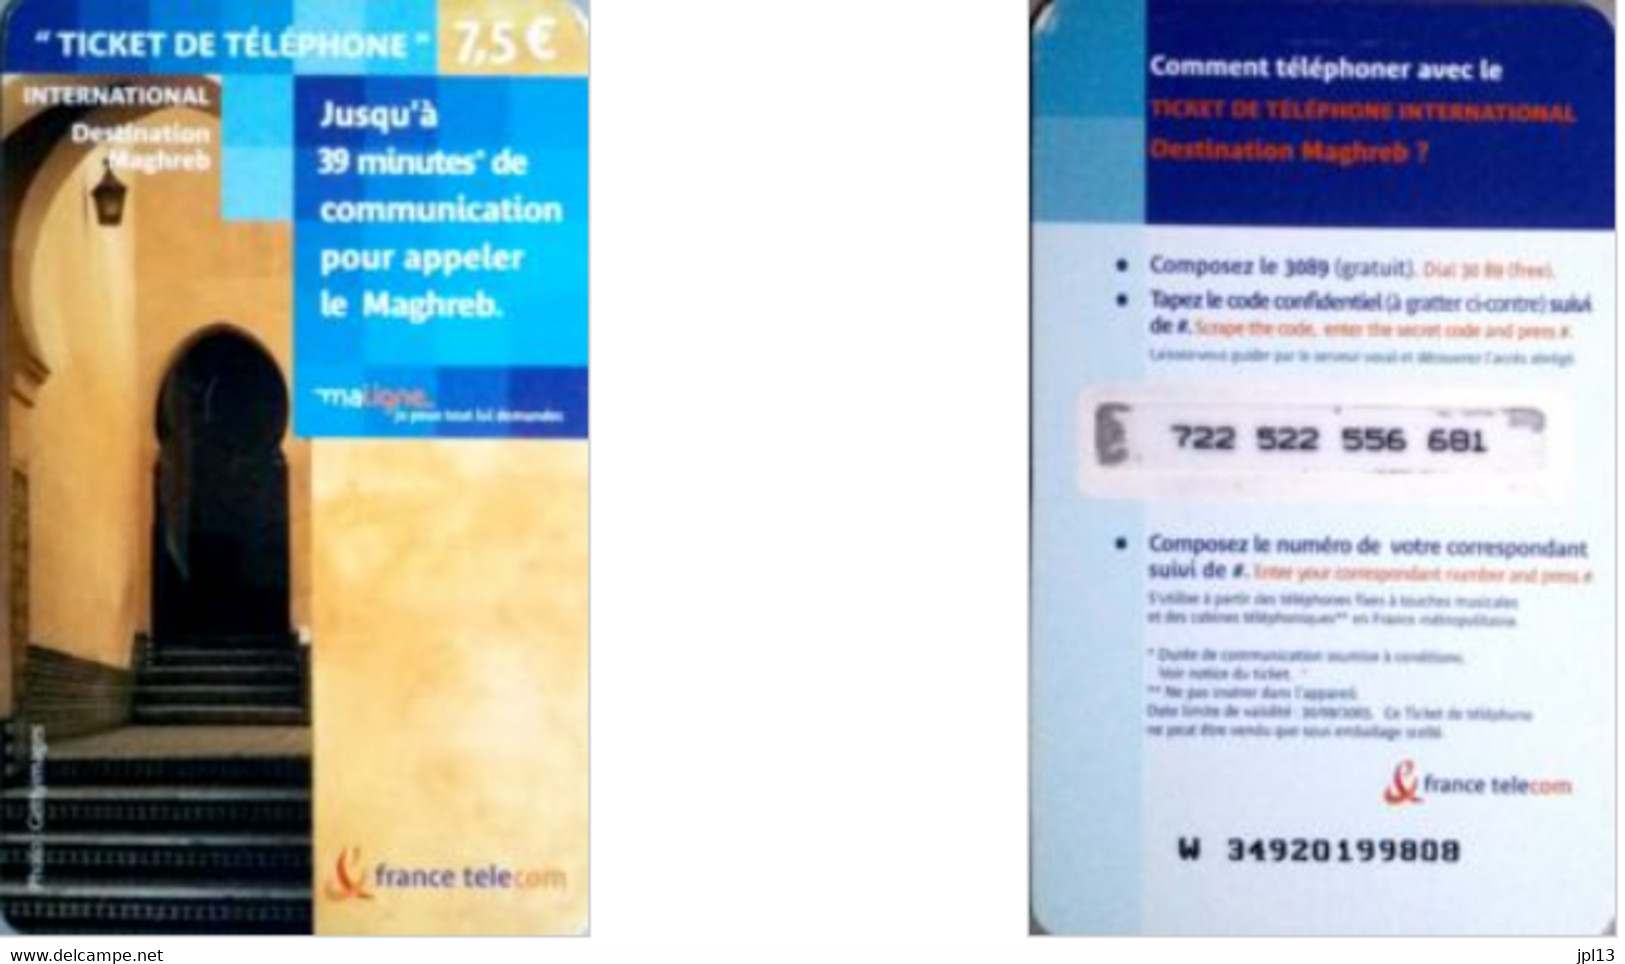 Ticket Téléphone - France - France Telecom - 7,5€ International Destination Maghreb, Série W 3492, Exp. 30/09/2005 - Tickets FT